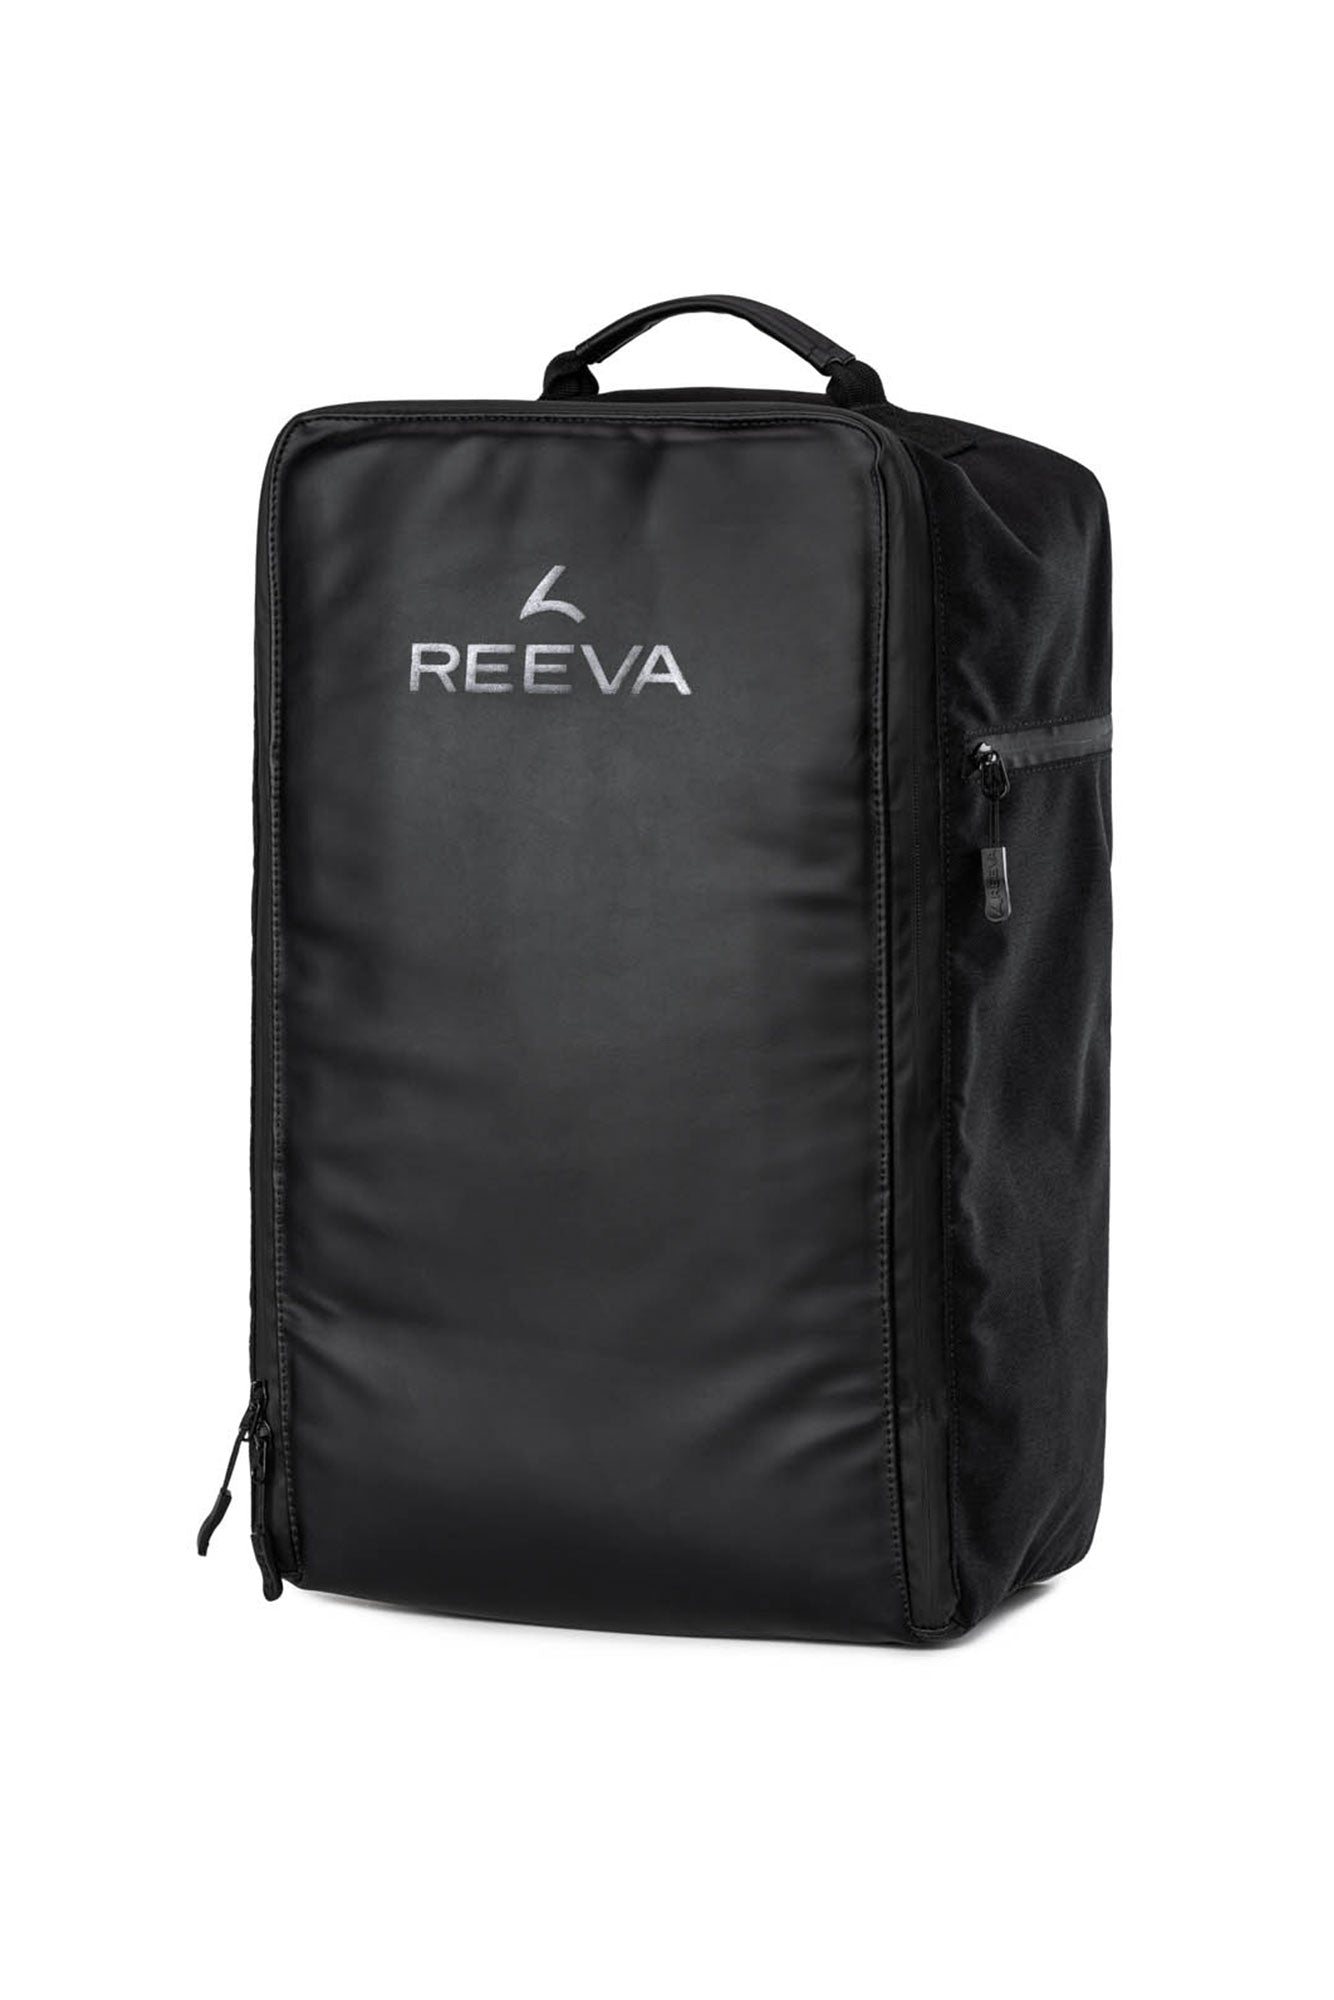 Reeva The Beast™ - حقيبة ظهر للجيم/اللياقة البدنية